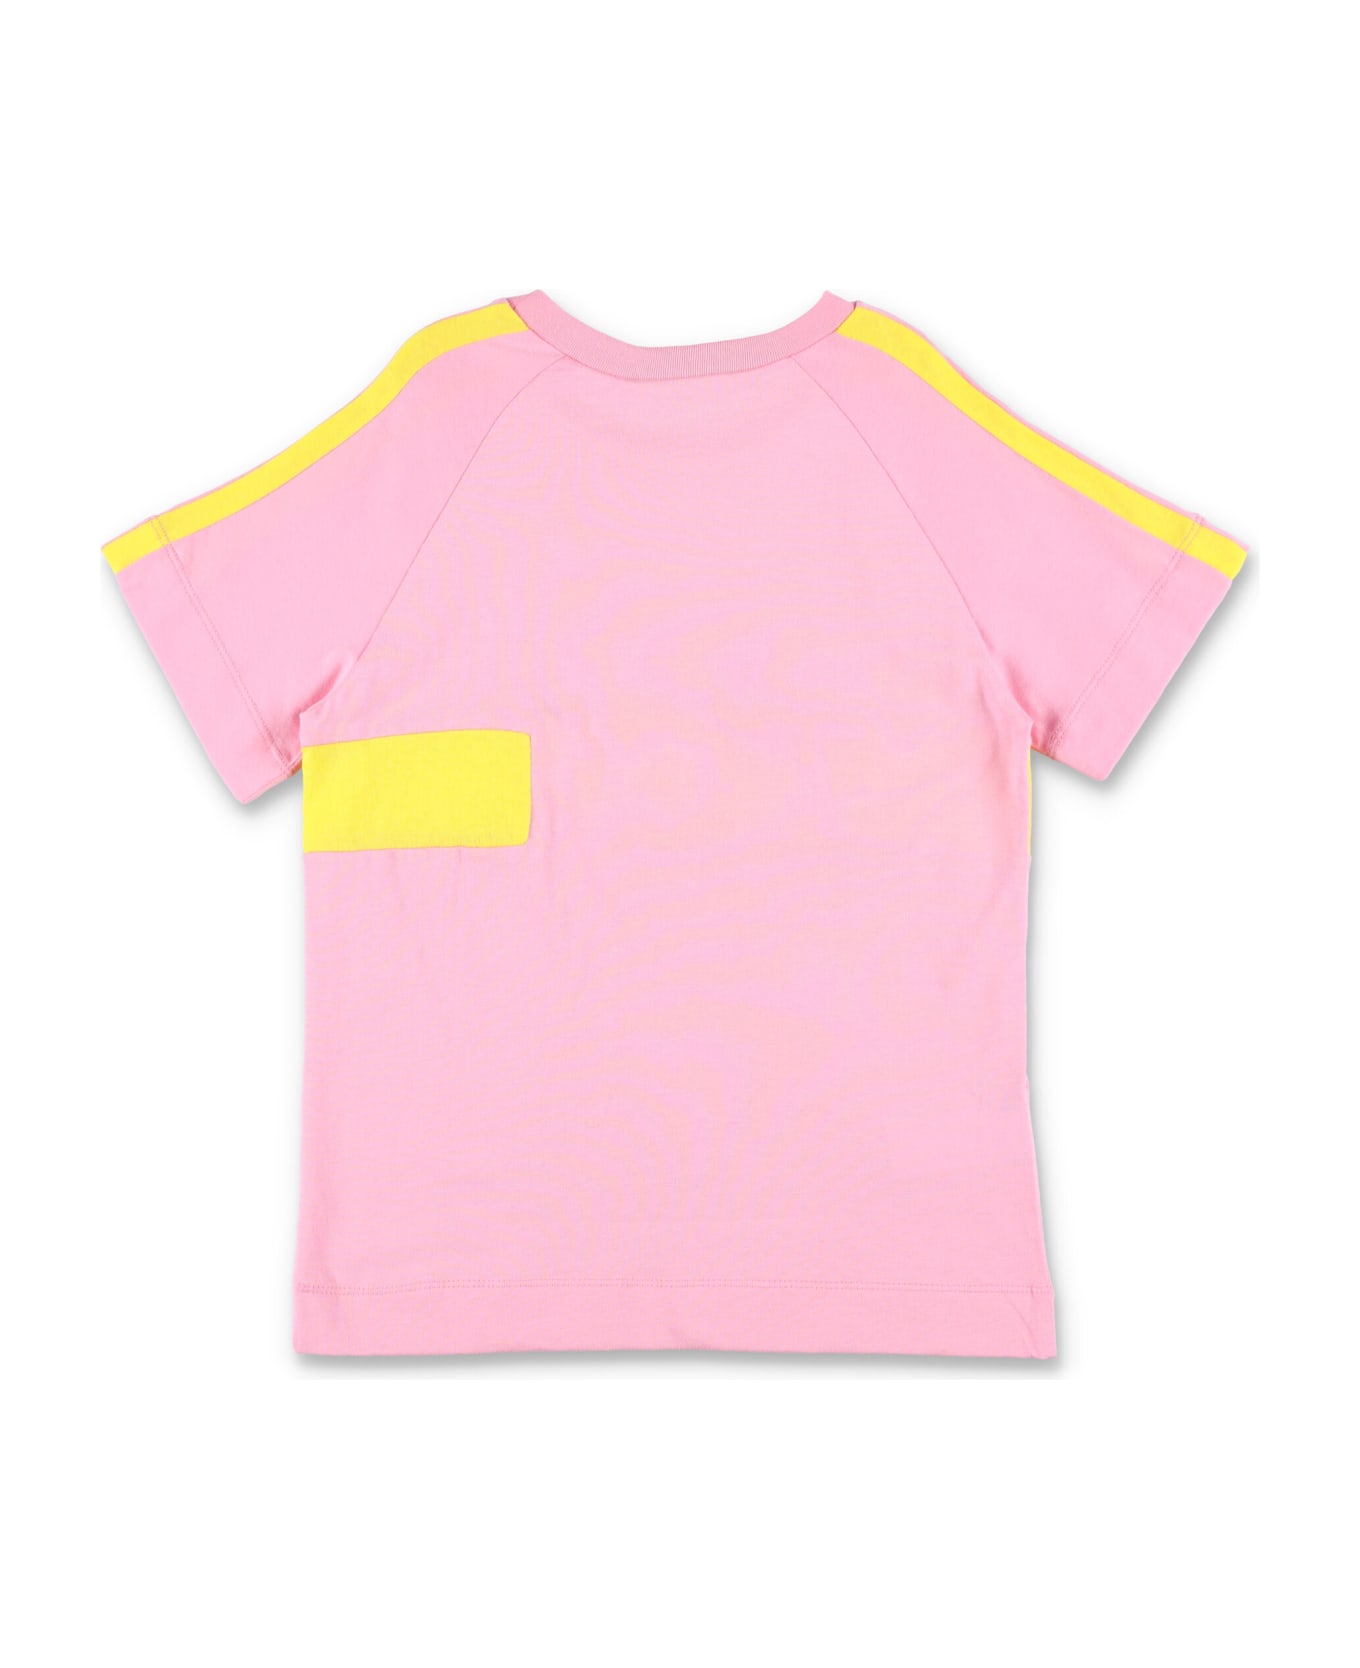 Marni Colorblock T-shirt - ROSE